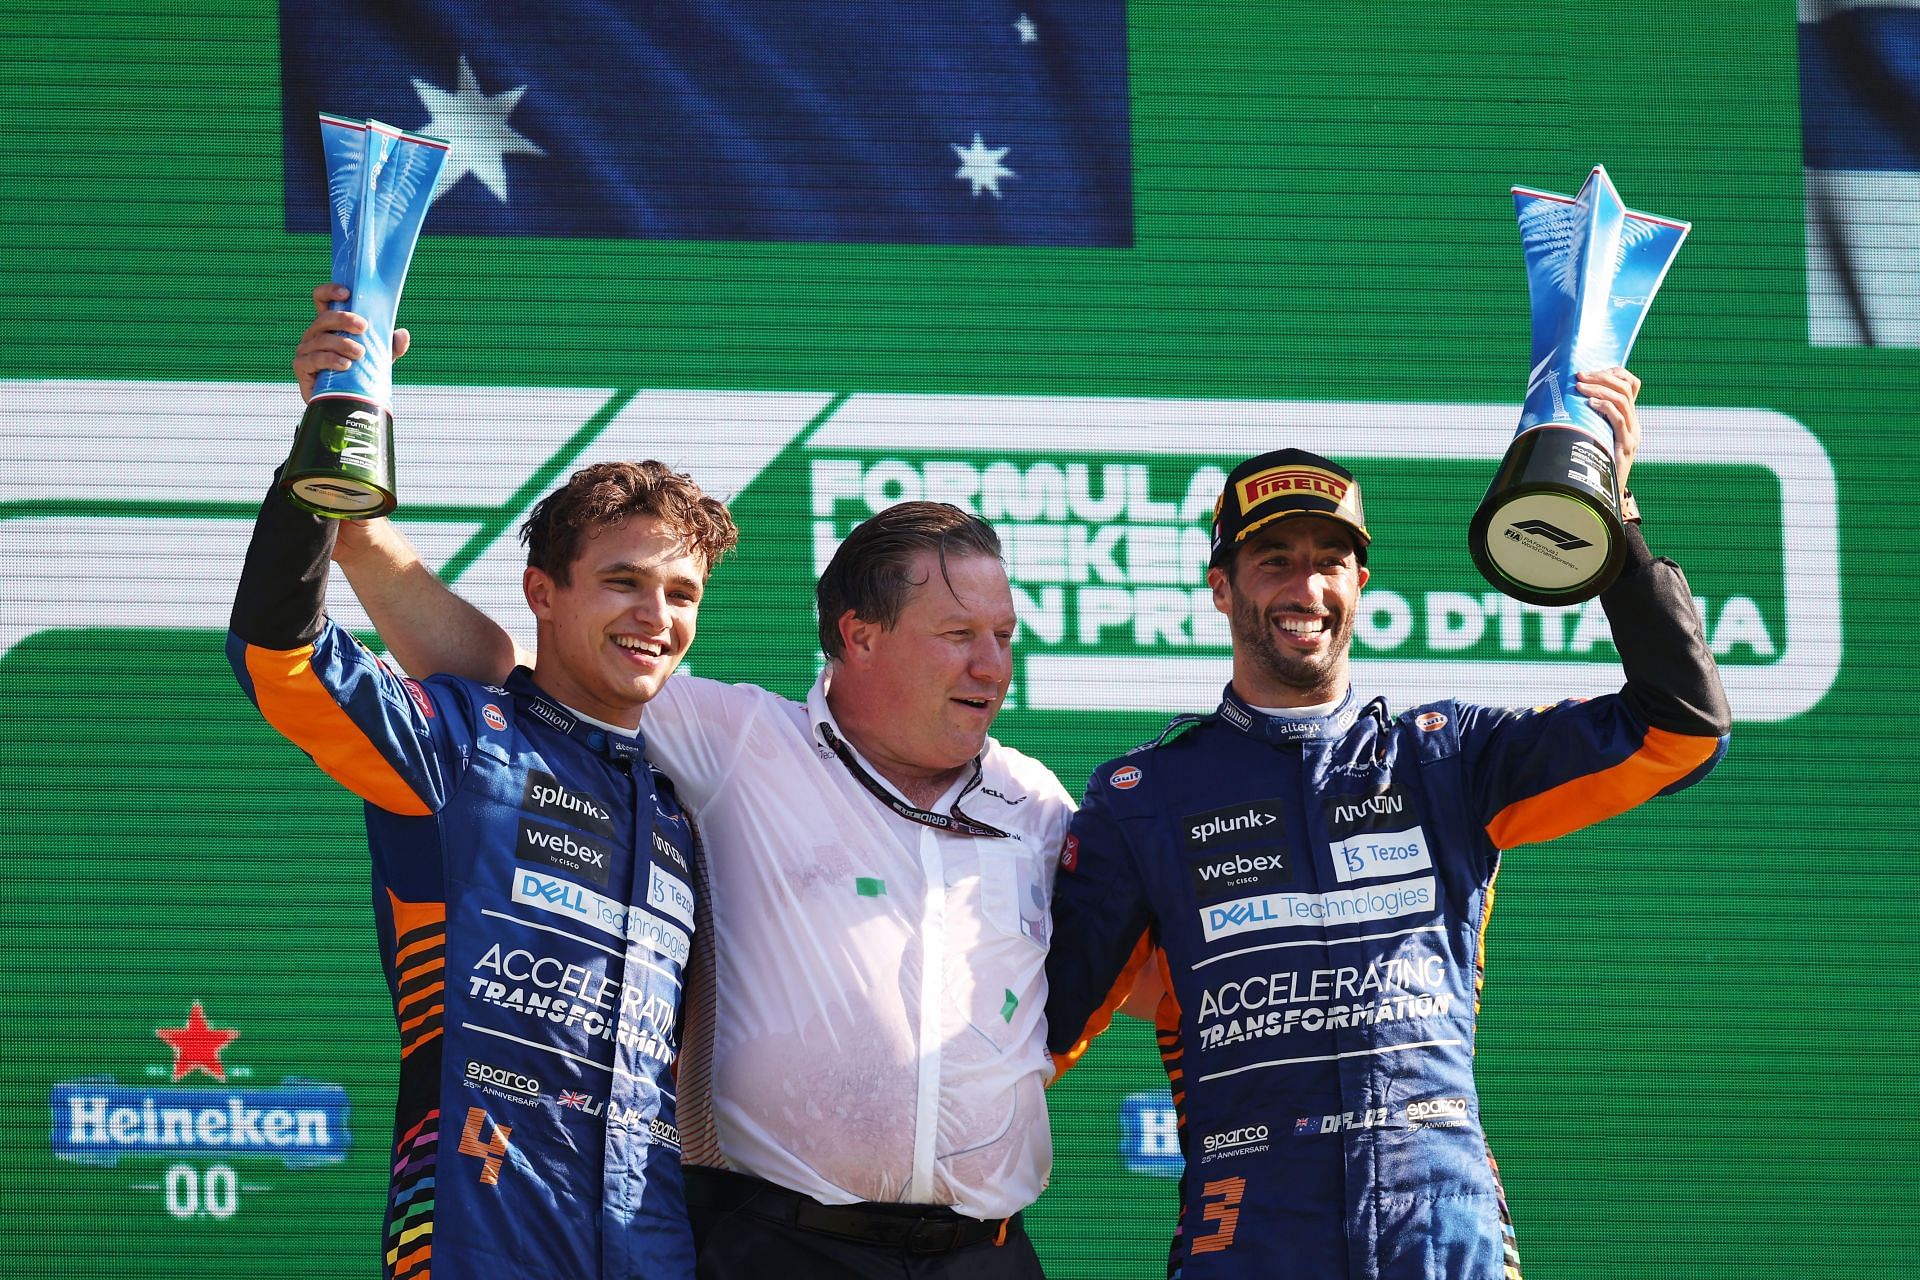 McLaren CEO Zak Brown (center) on the podium with Daniel Ricciardo (right) and Lando Norris (left) for the 2021 Italian Grand Prix